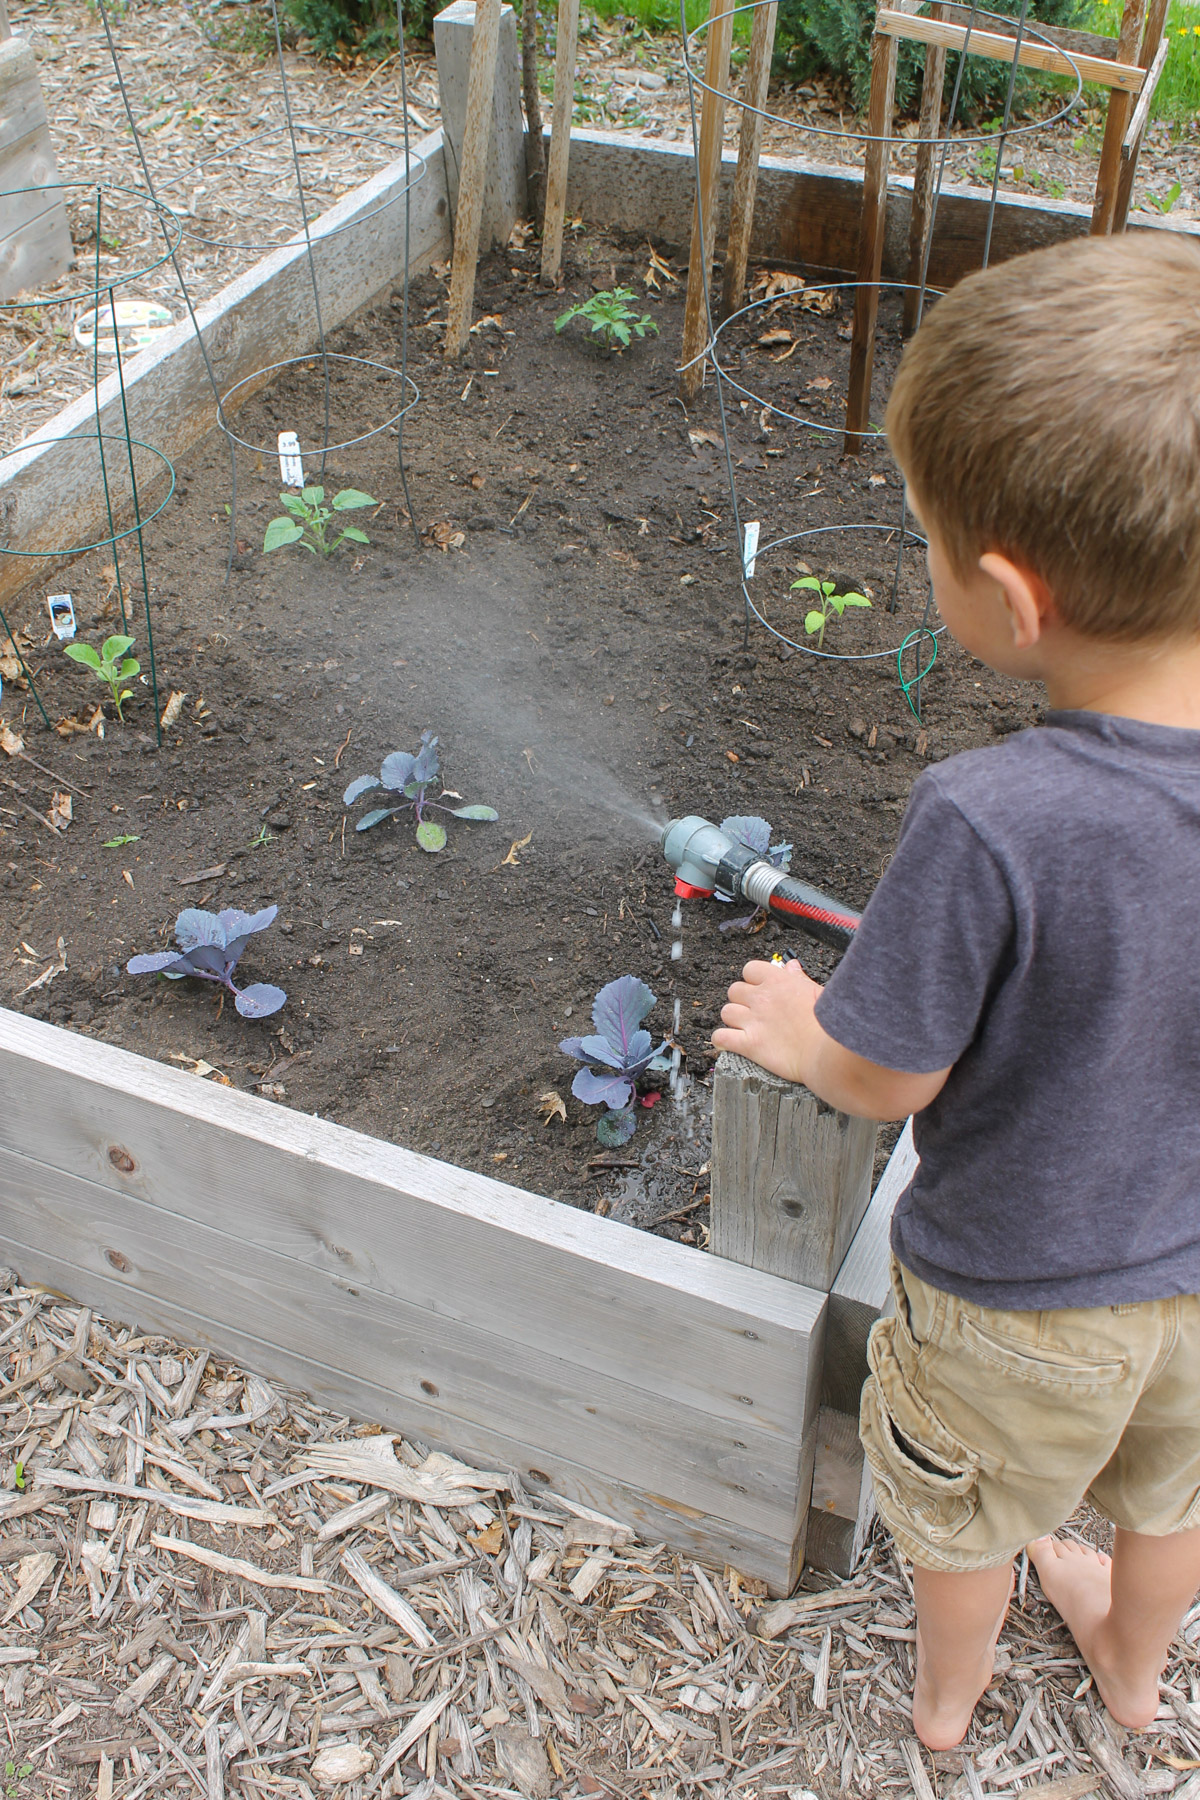 A child watering the veggie garden with a garden hose.